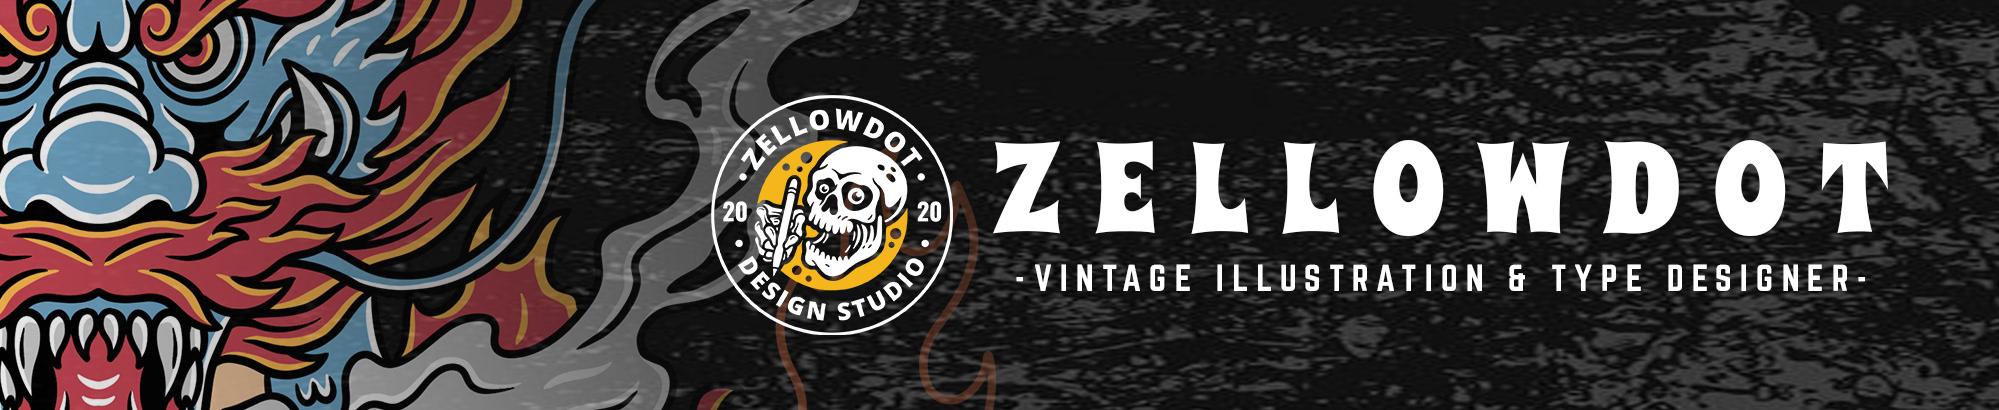 zellowdot artwork's profile banner